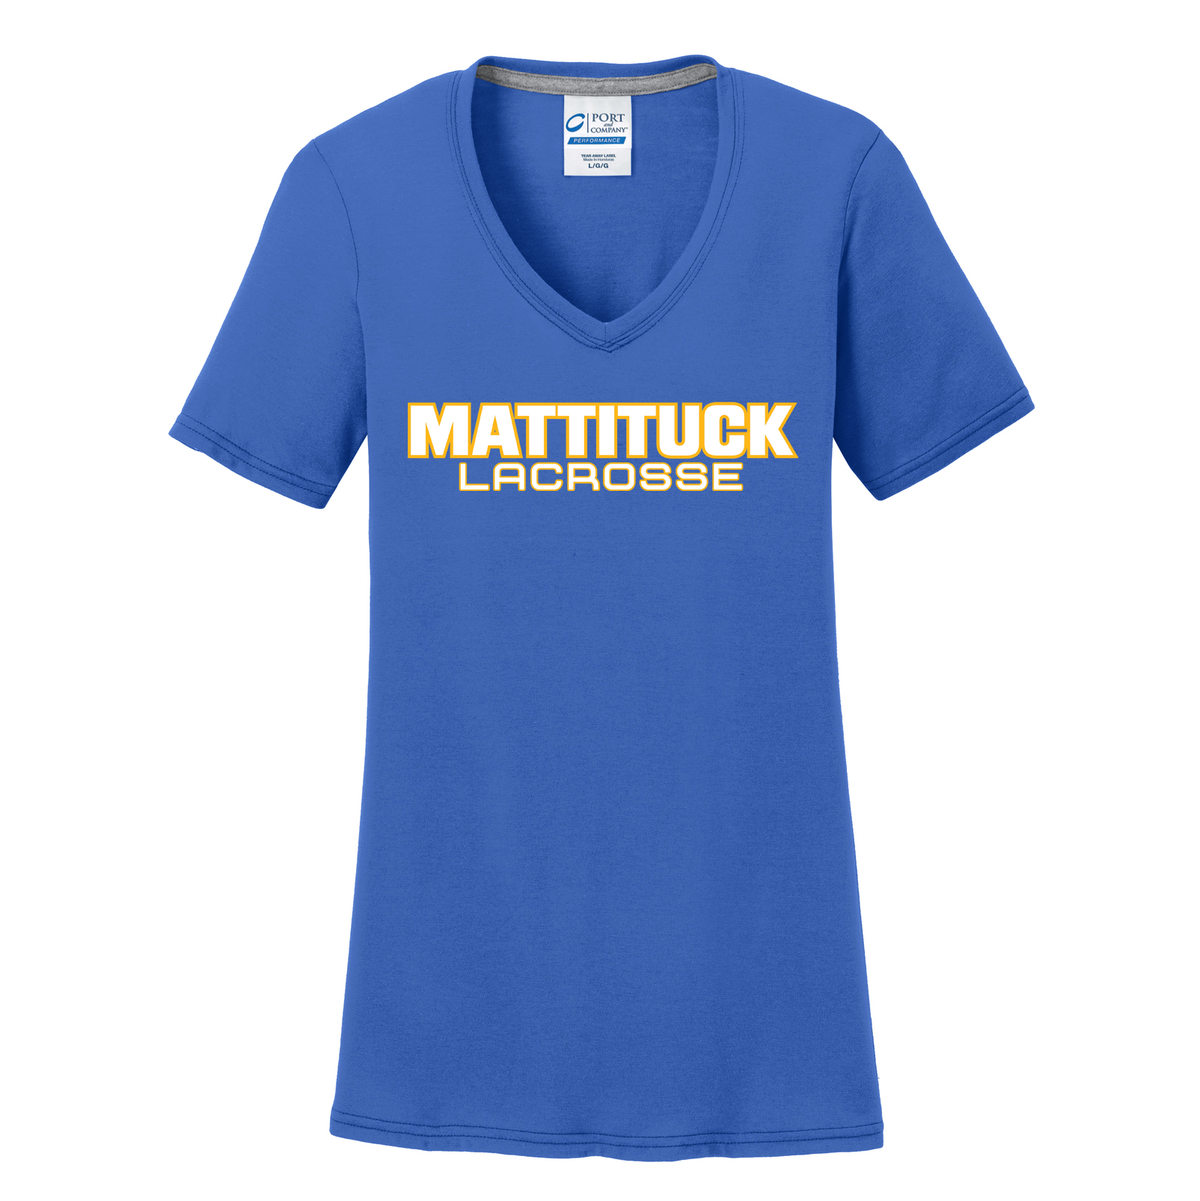 Mattituck Lacrosse Women's T-Shirt